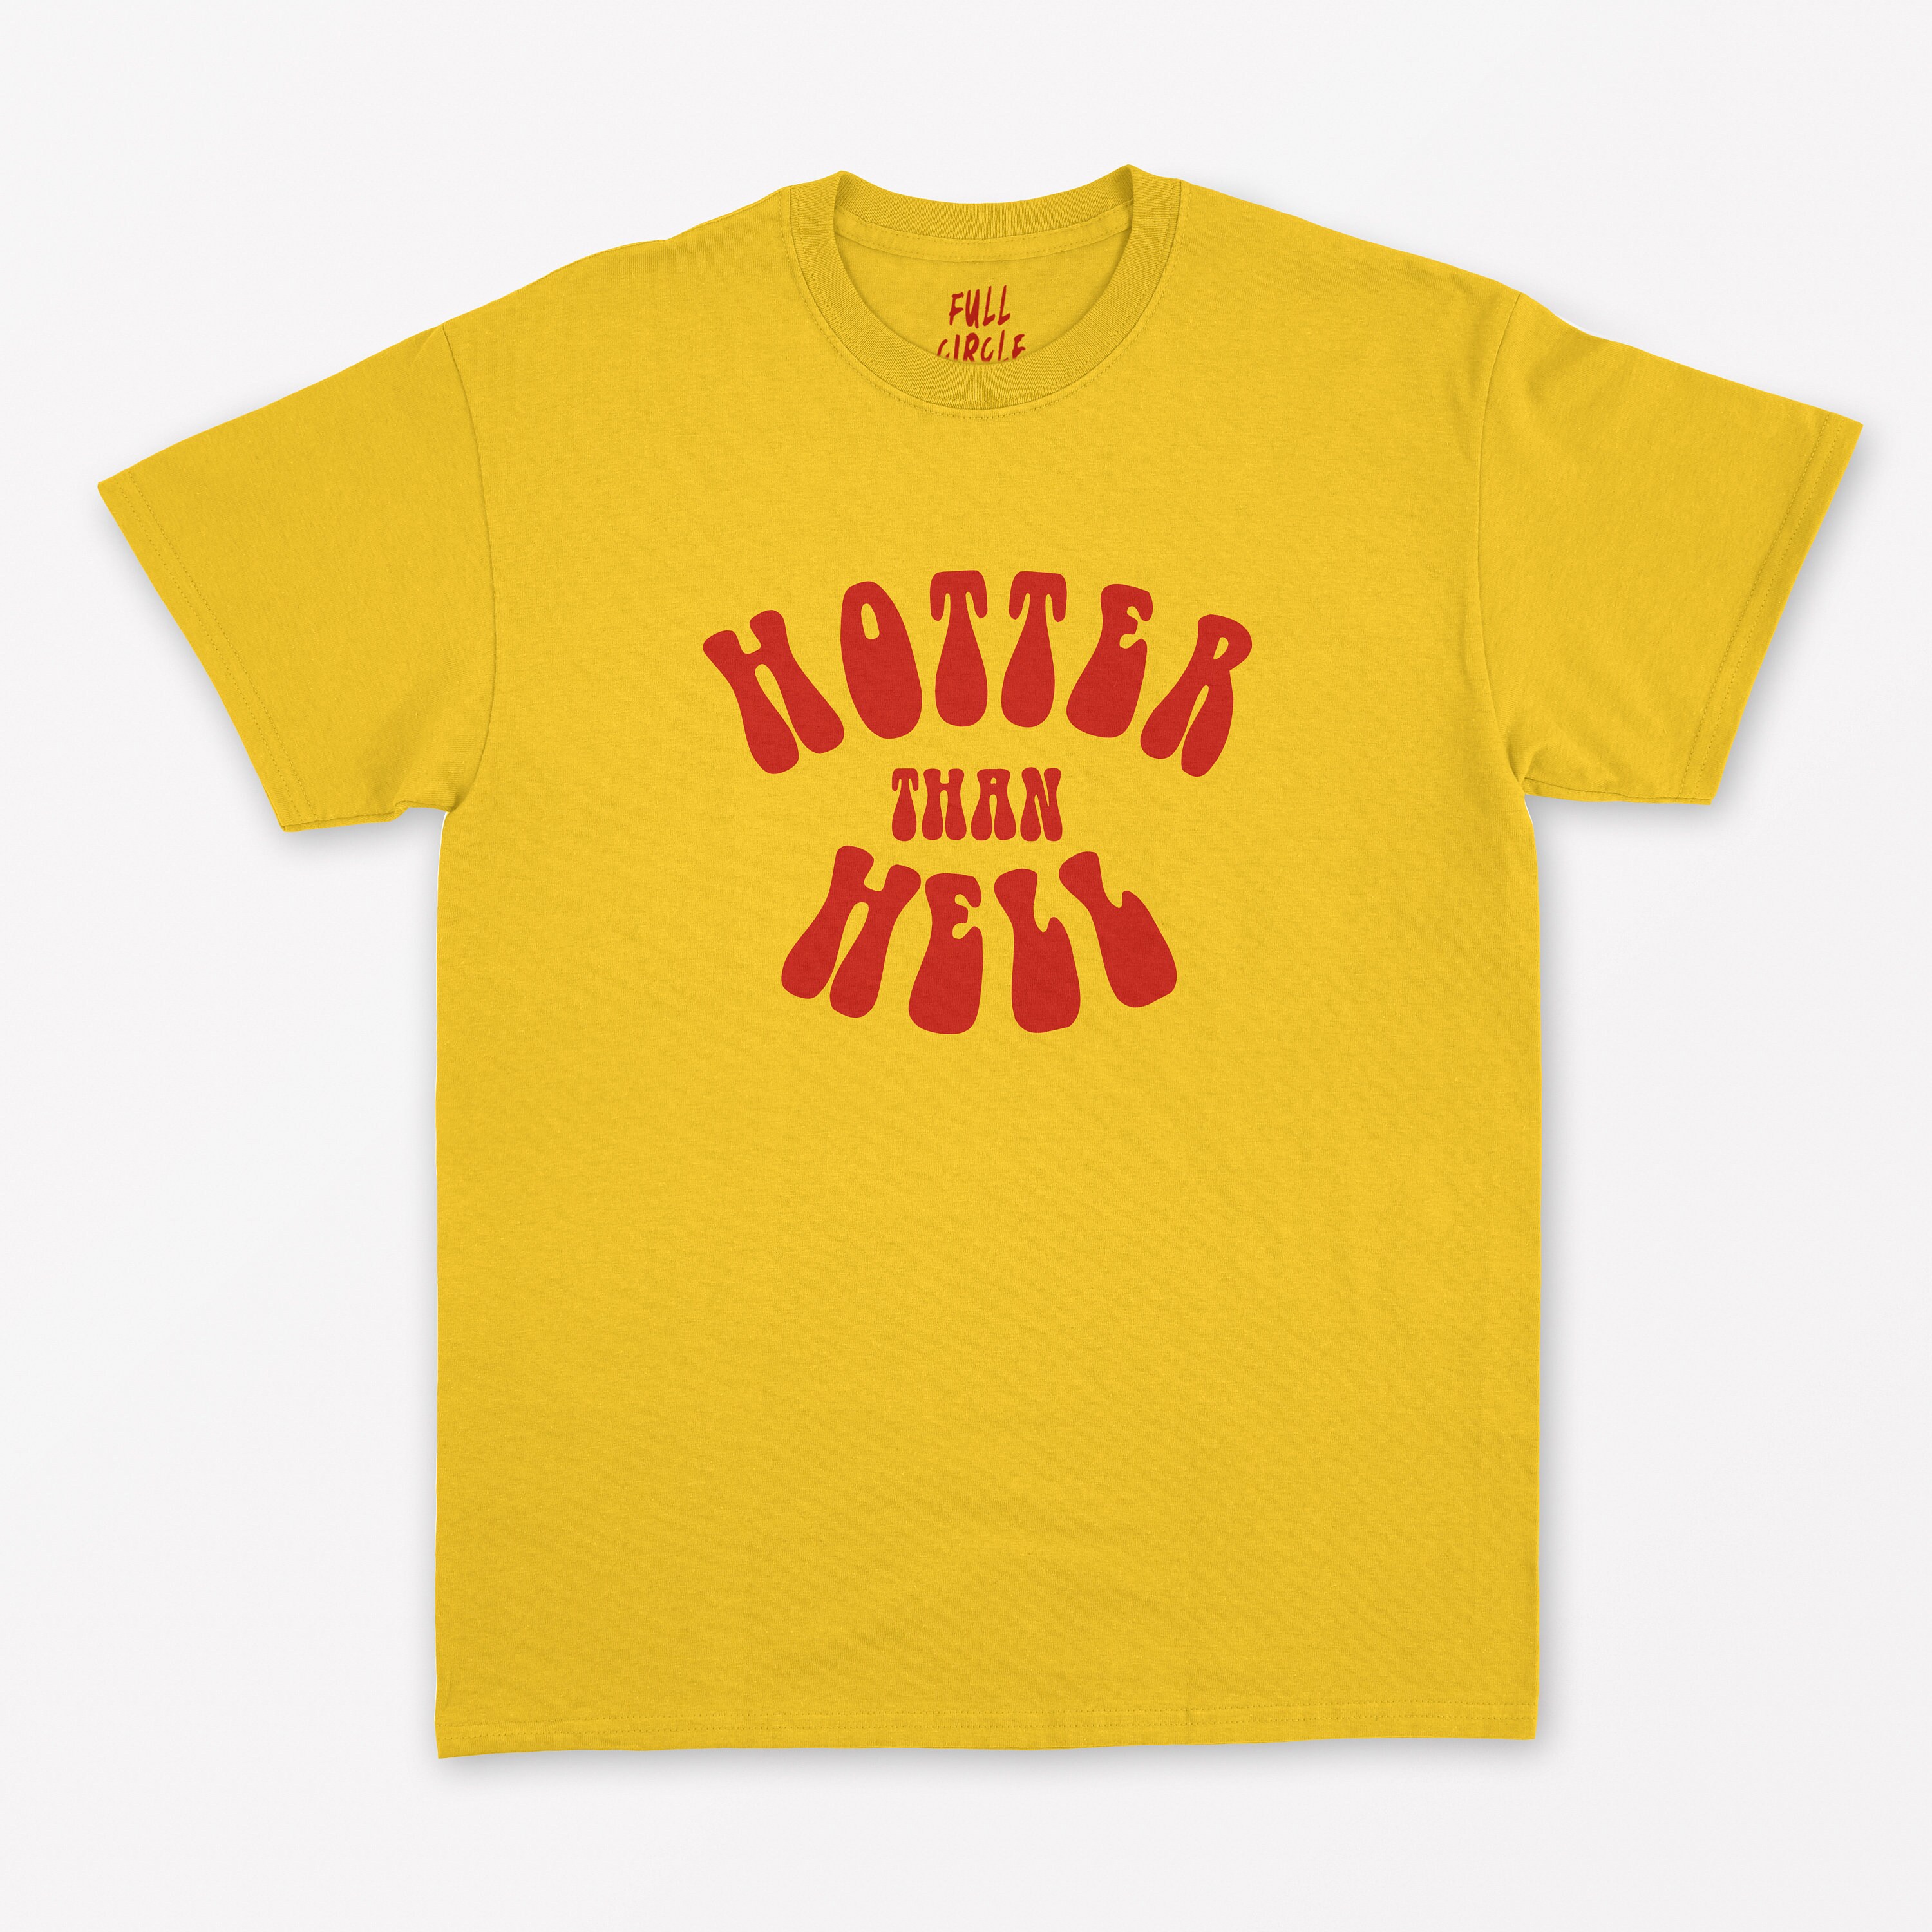 Discover Hotter Than Hell T Shirt - Sassy T Shirt / Women's Shirt / Printed T Shirt / Fashion T Shirt / Instagram / Vintage Shirt / 70's T Shirt